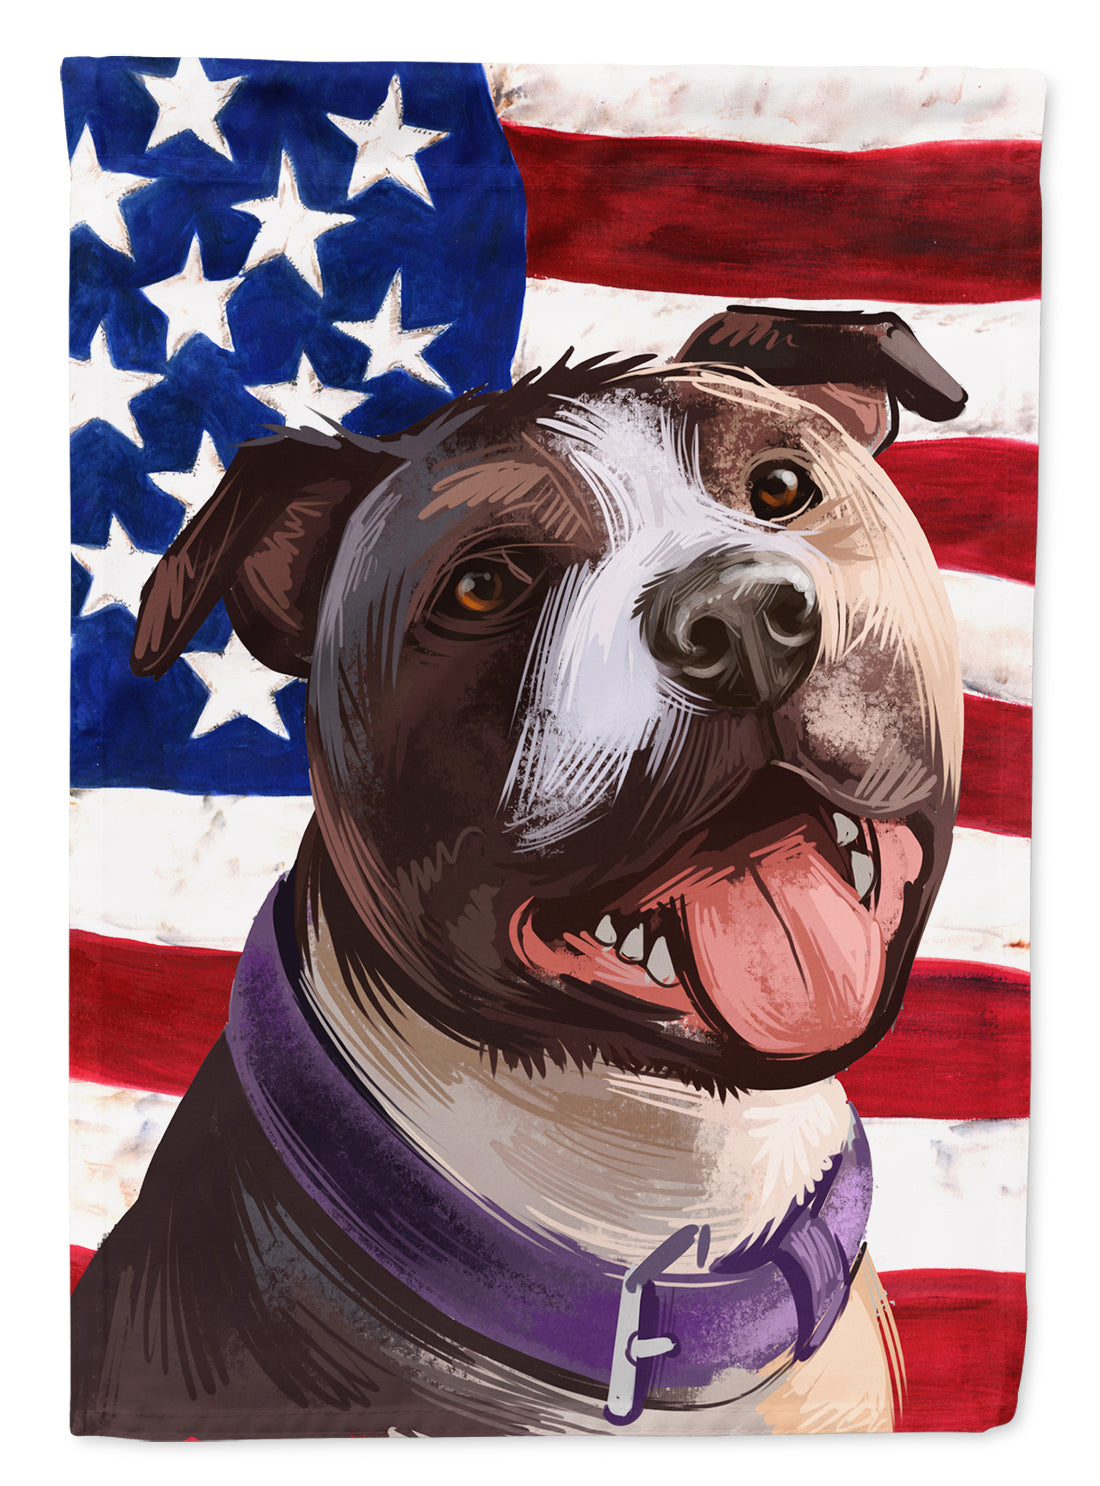 Bull Terrier Dog American Flag Flag Garden Size CK6467GF  the-store.com.